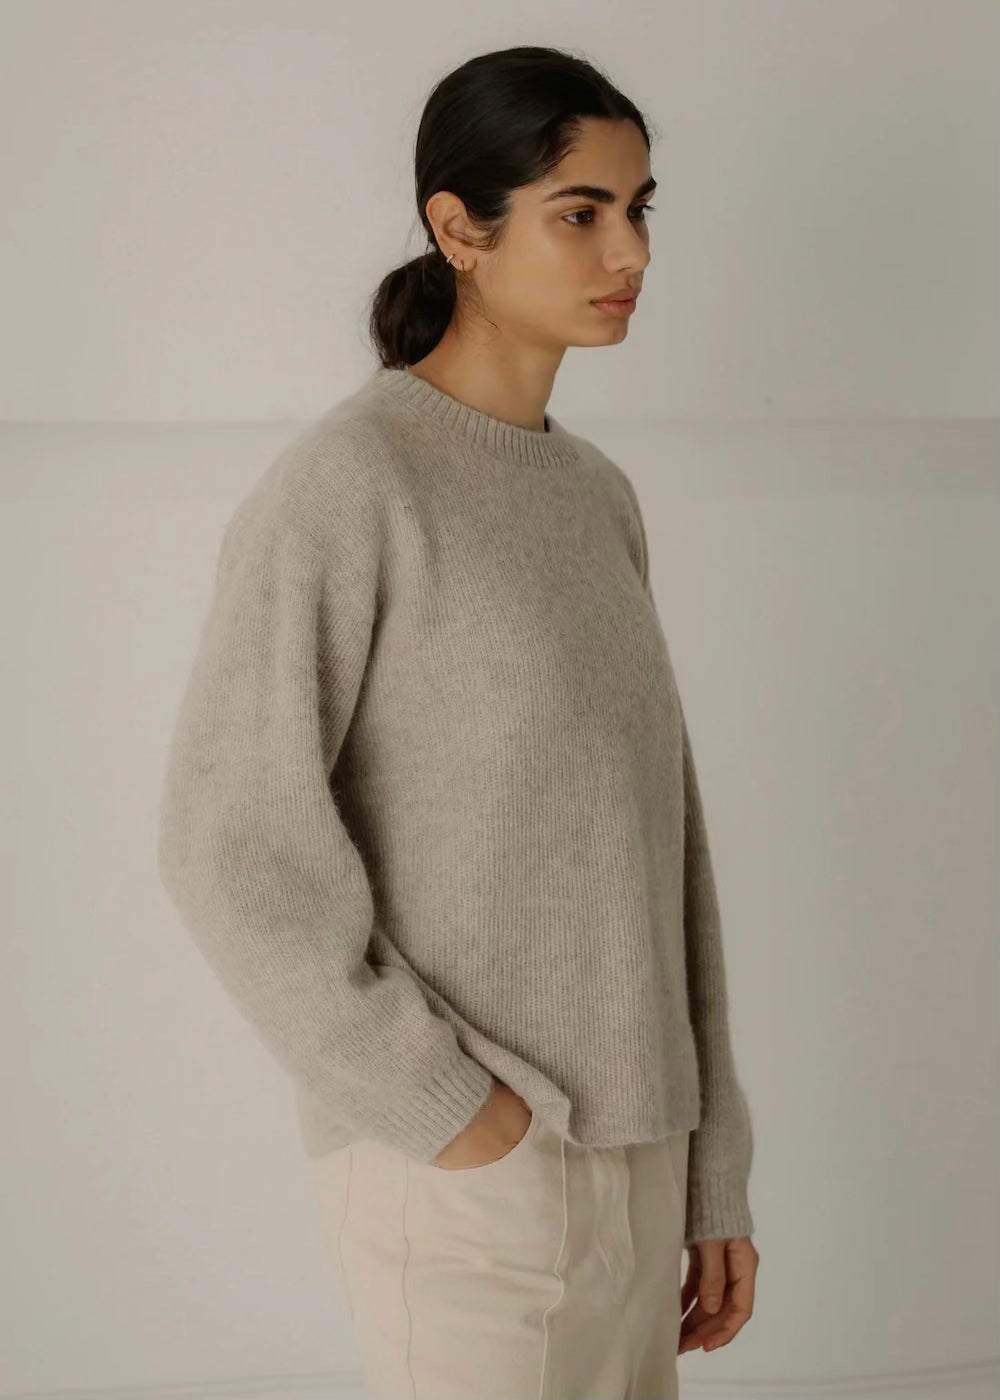 Bare Knitwear  Jude Alpaca Crew Sweater - The Phoenix